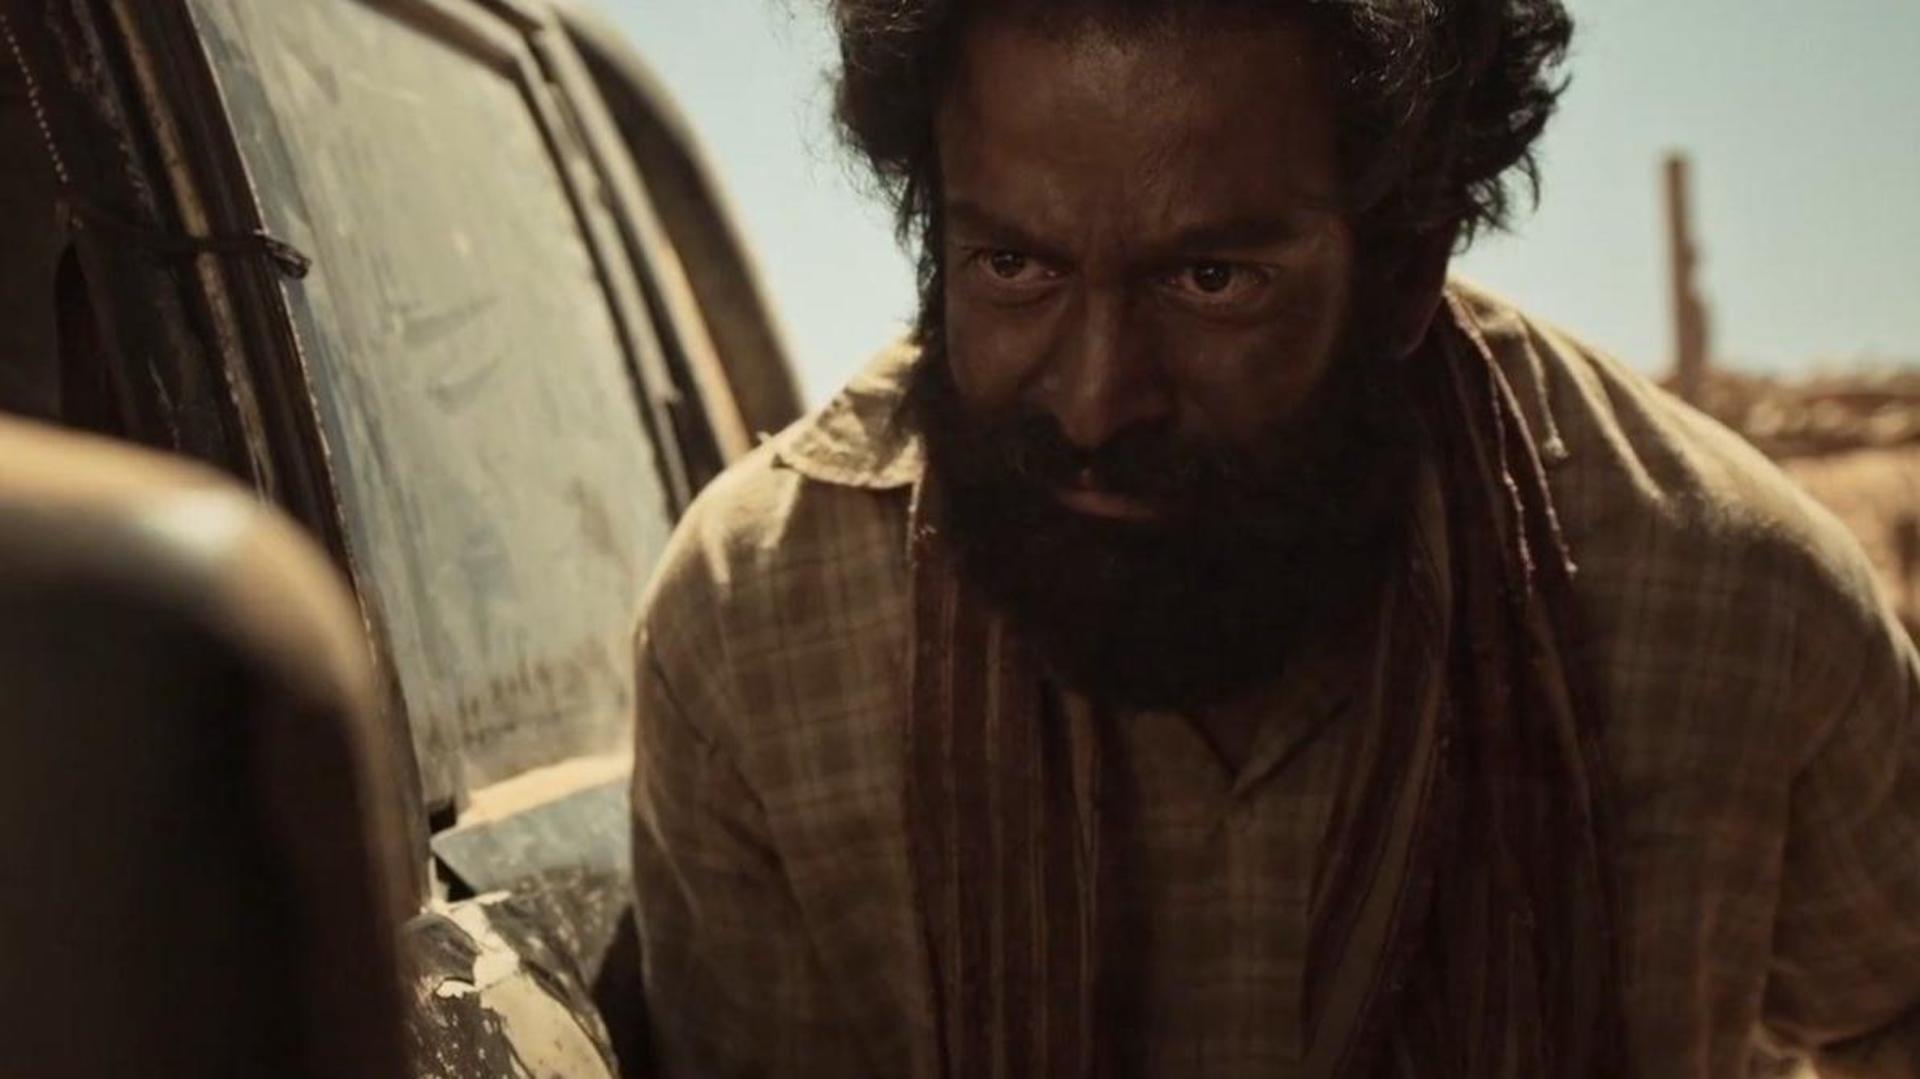 'Aadujeevitham': Director Blessy reacts to Prithviraj Sukumaran-led film's trailer leak